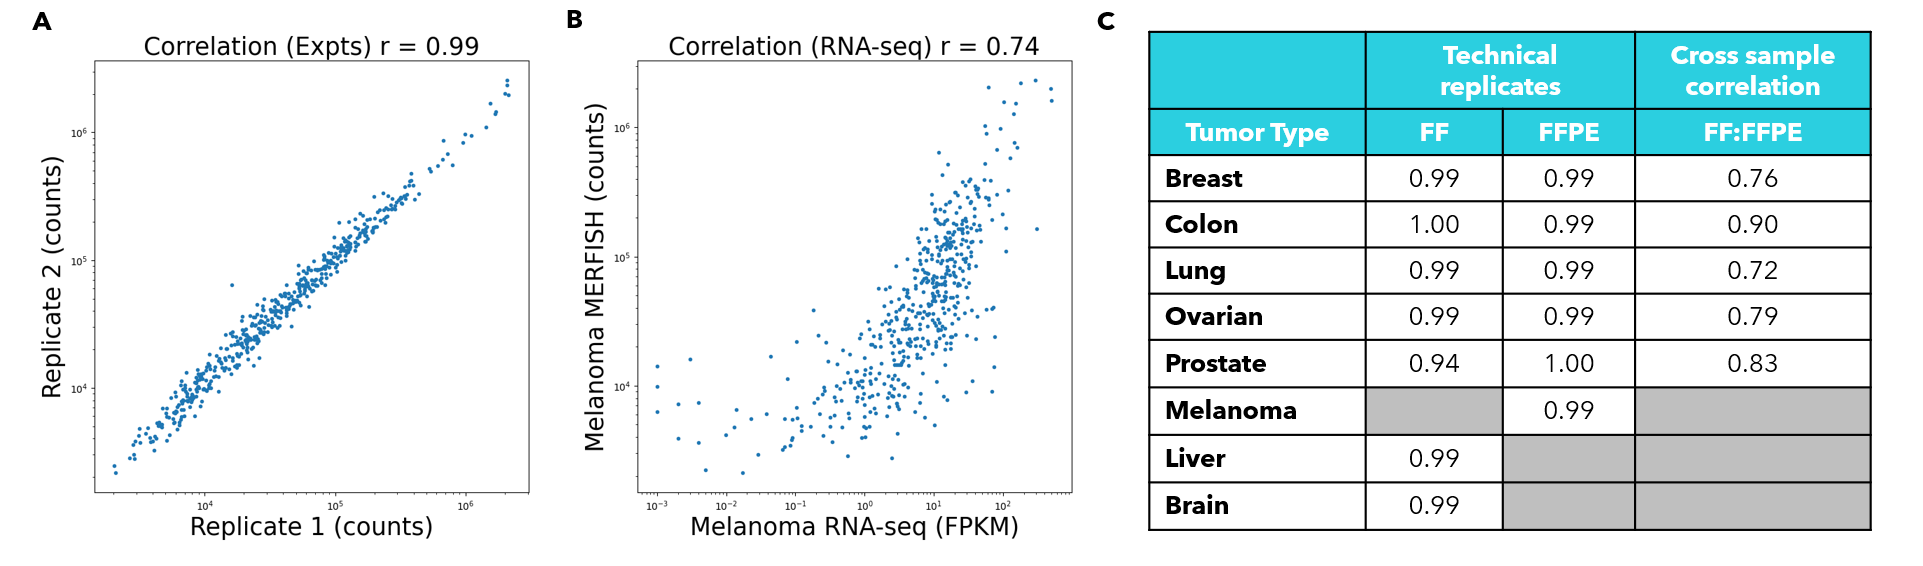 cancer panel correlation plots